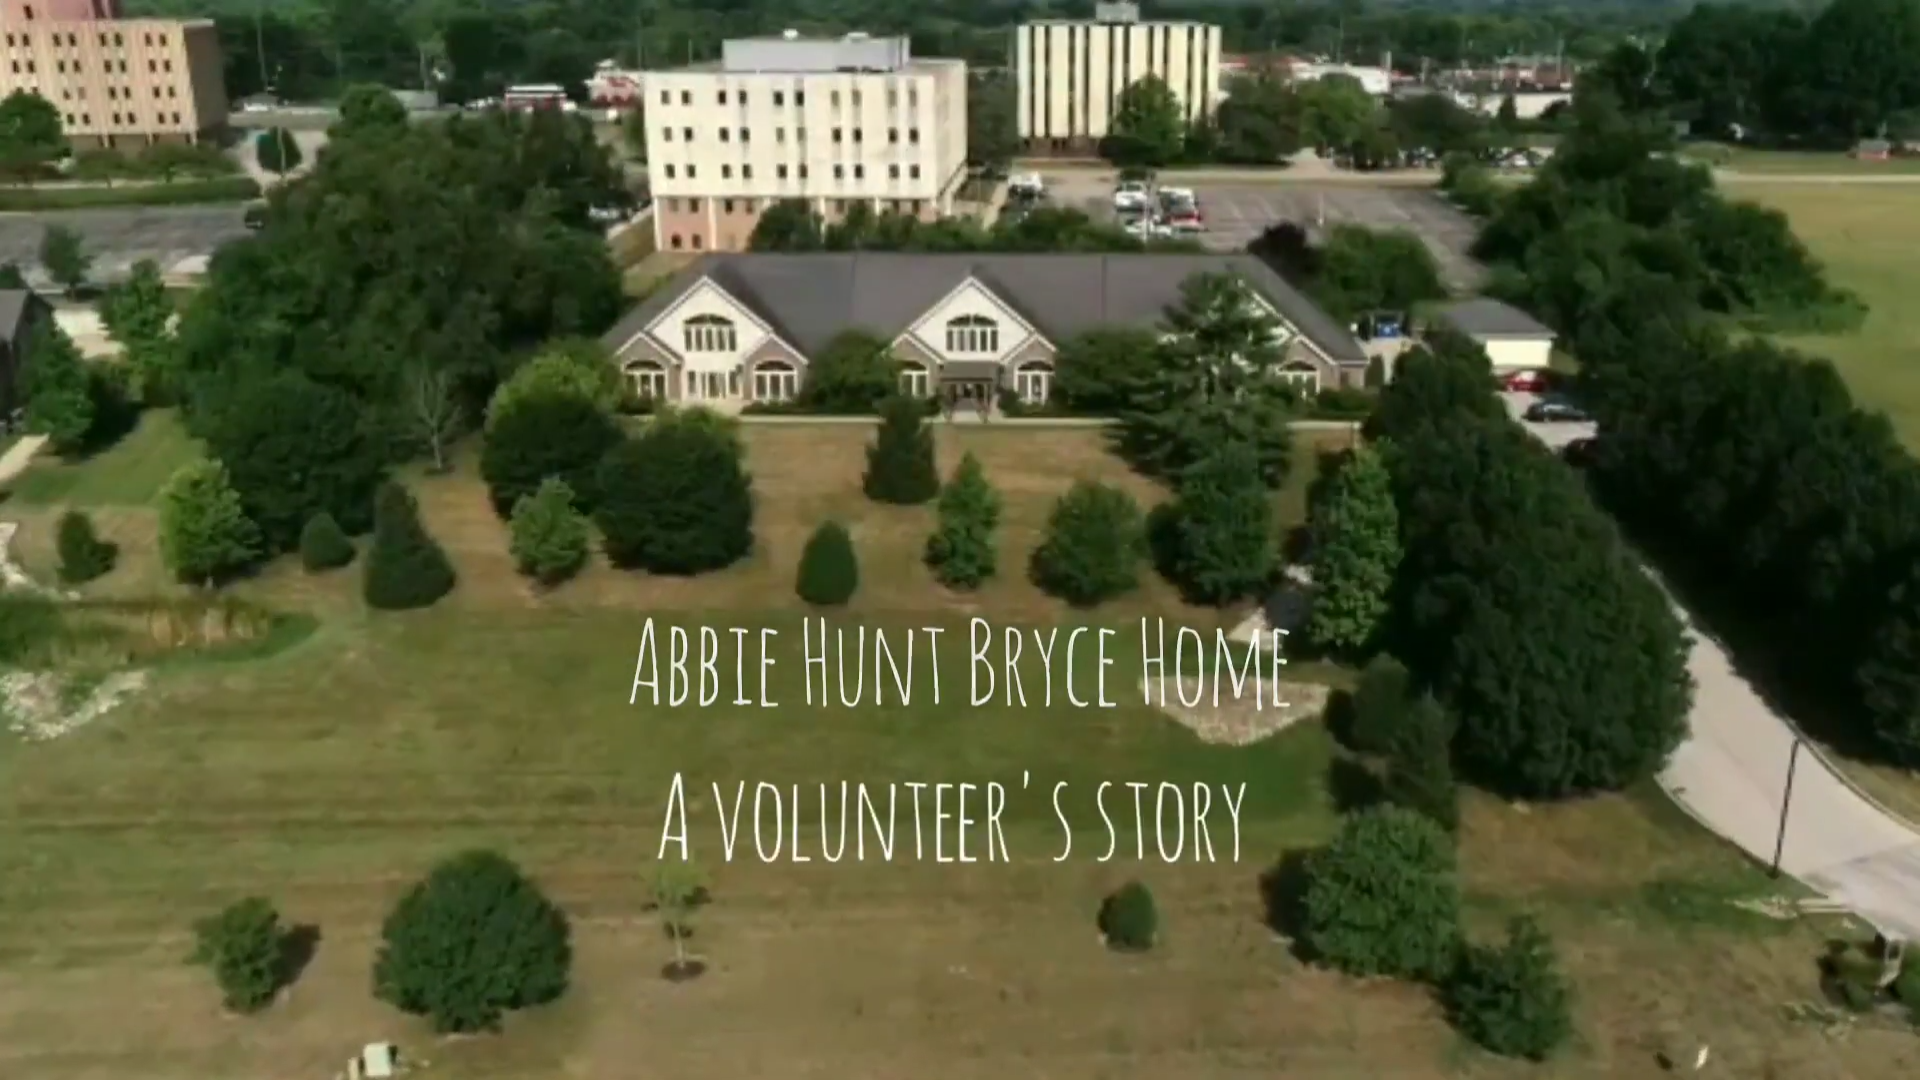 abbie hunt bryce home